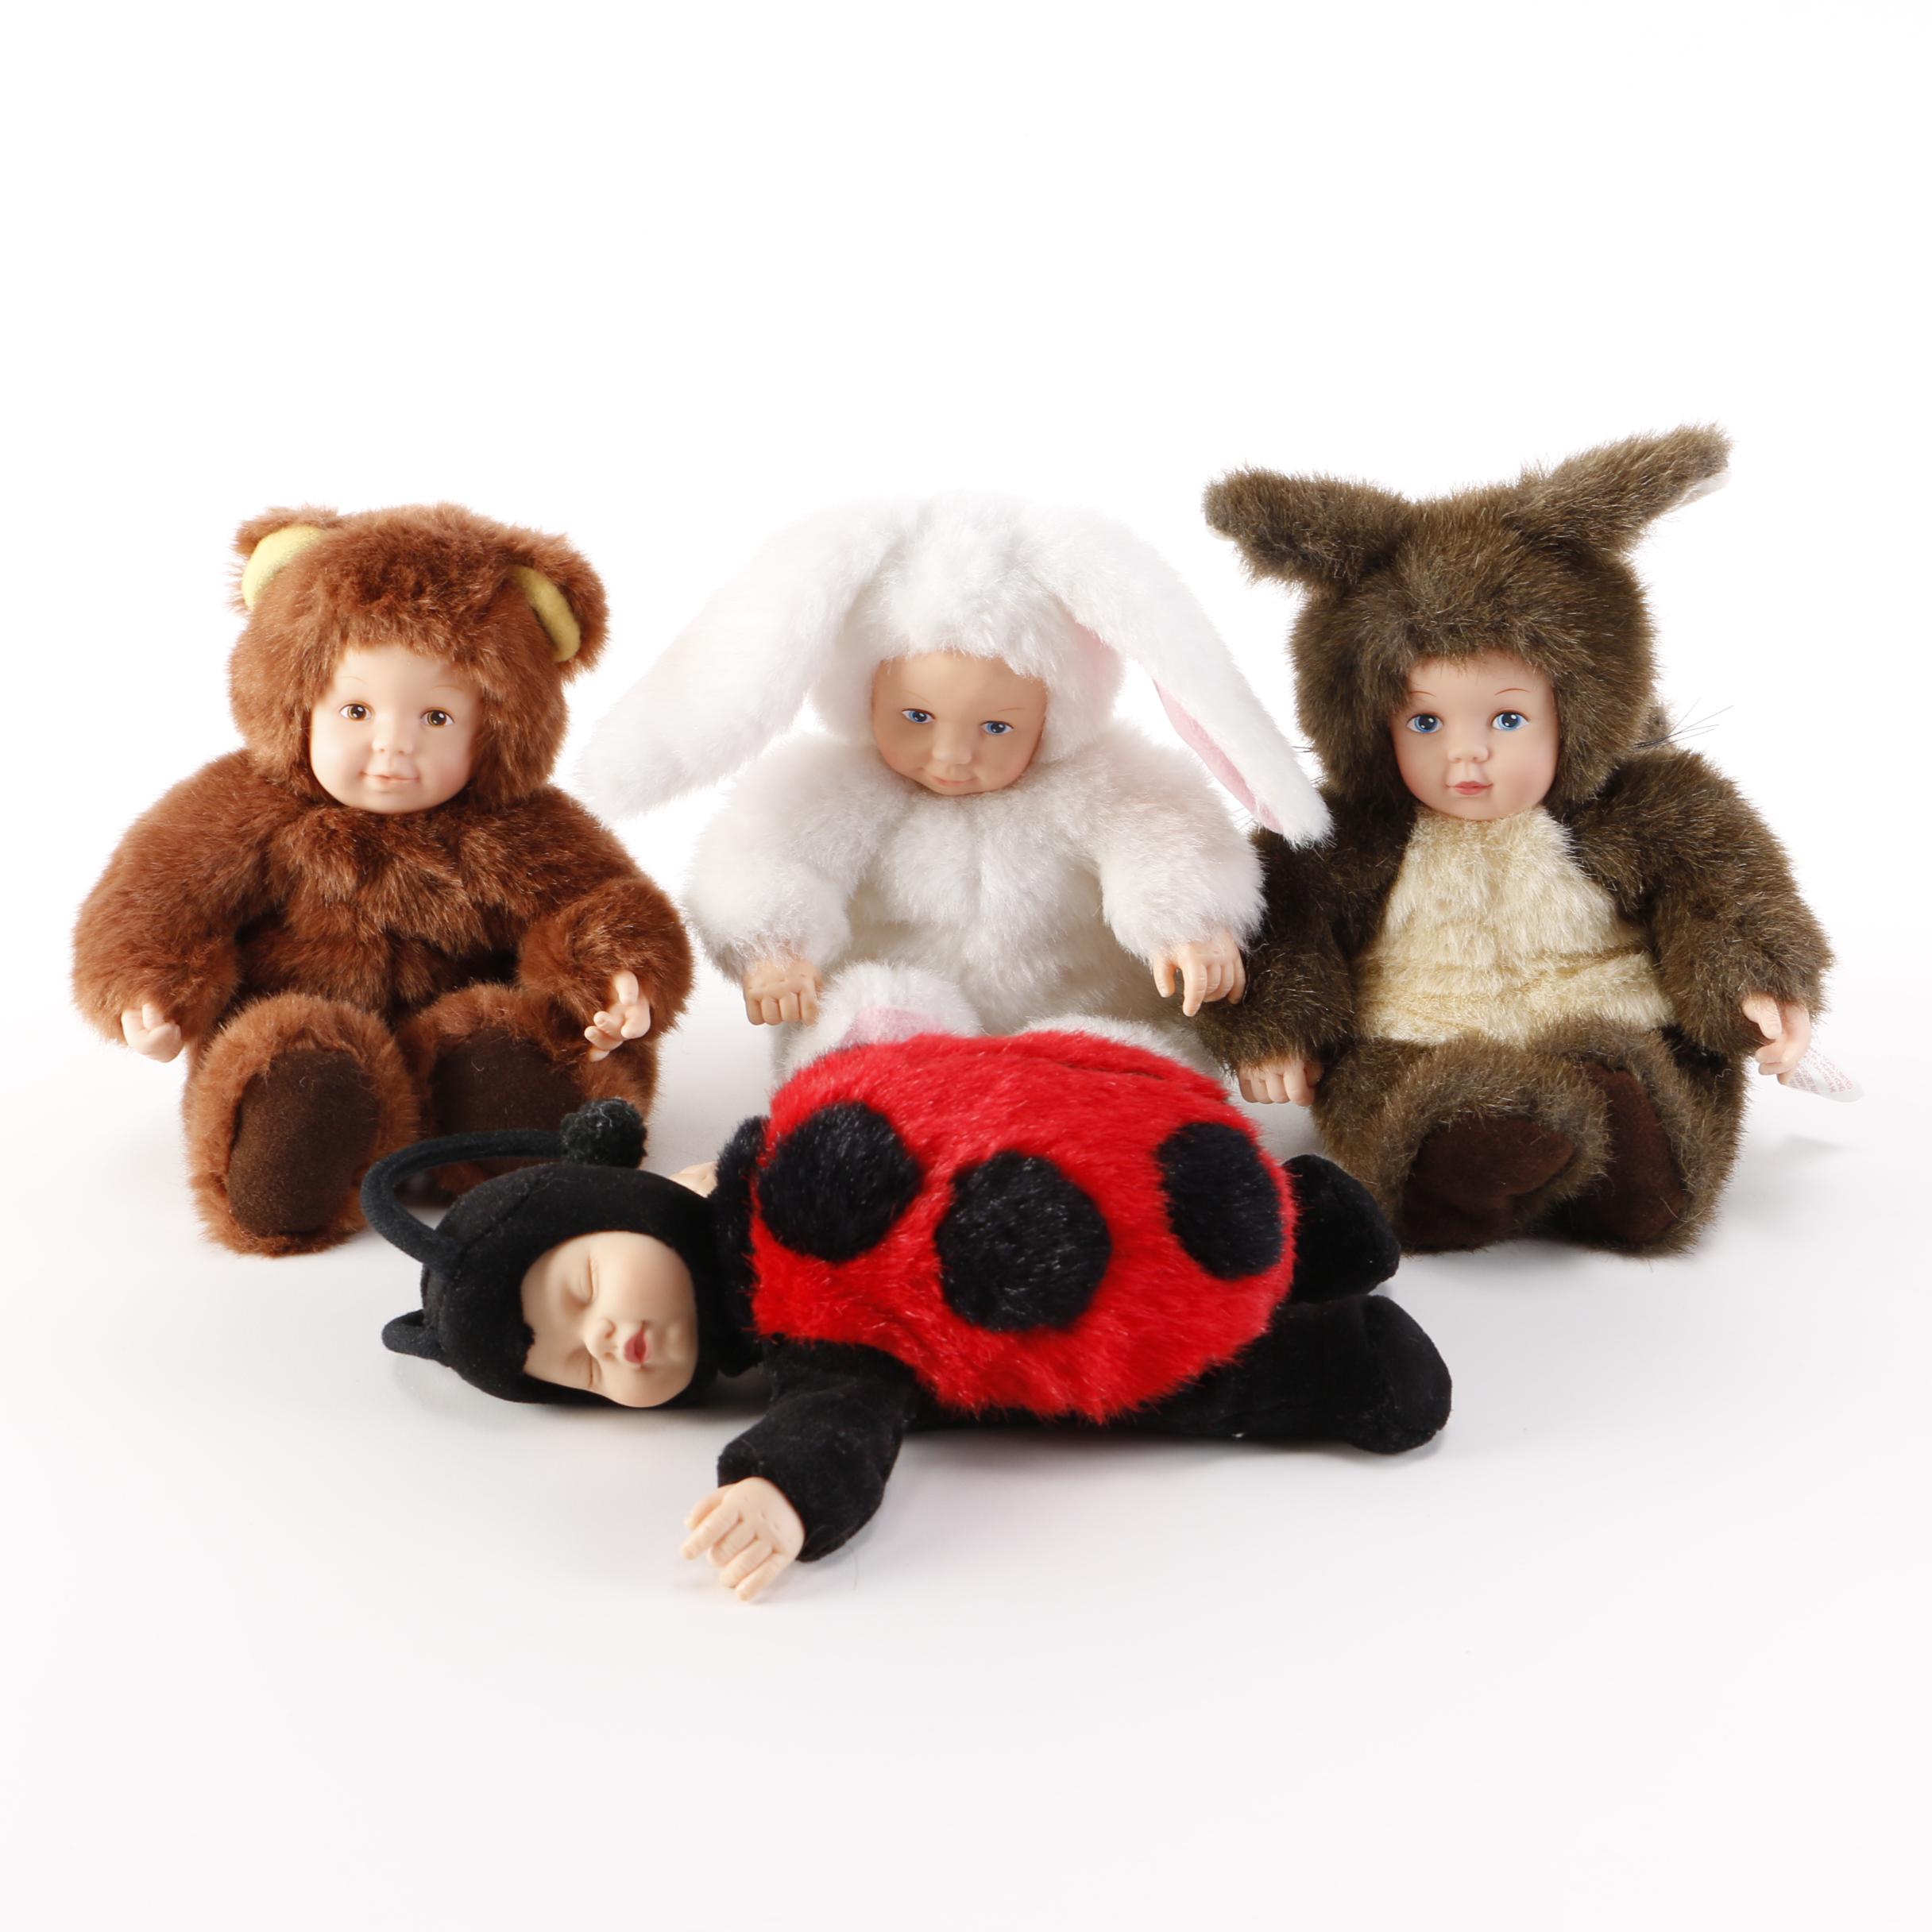 dolls dressed as animals